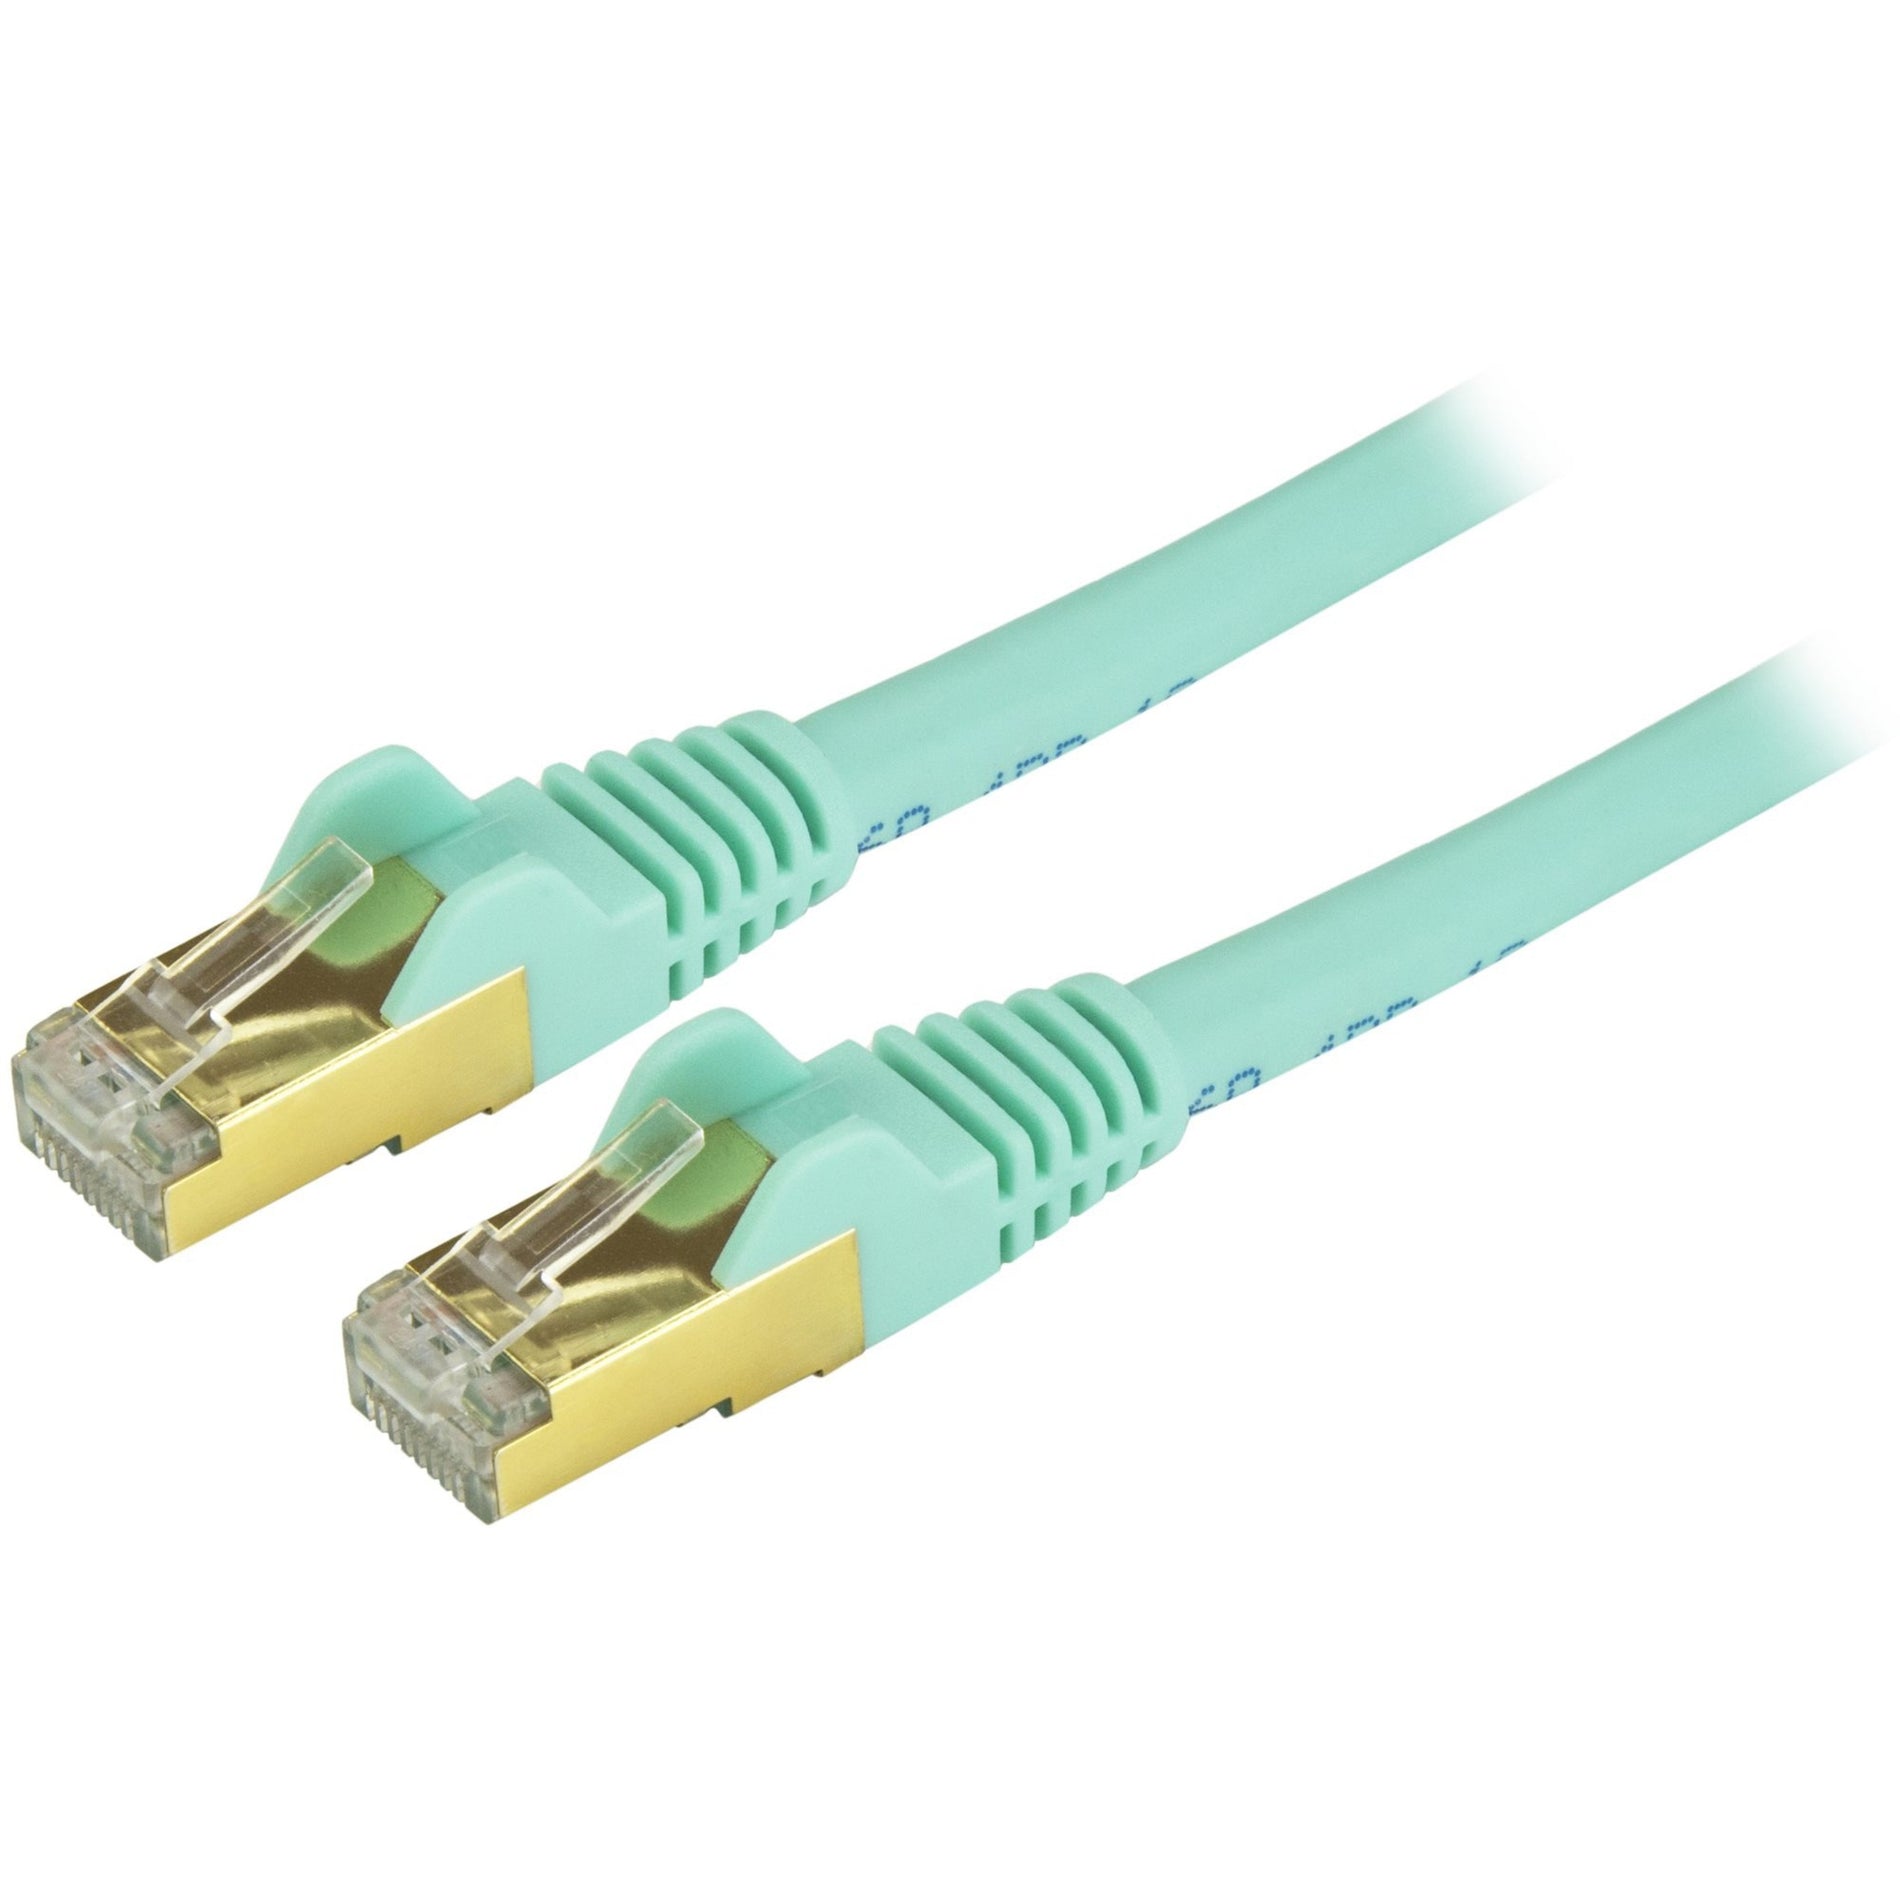 StarTech.com C6ASPAT4AQ Cat6a Ethernet Patch Cable - Shielded (STP) - 4 ft. Aqua Snagless RJ45 Ethernet Cord